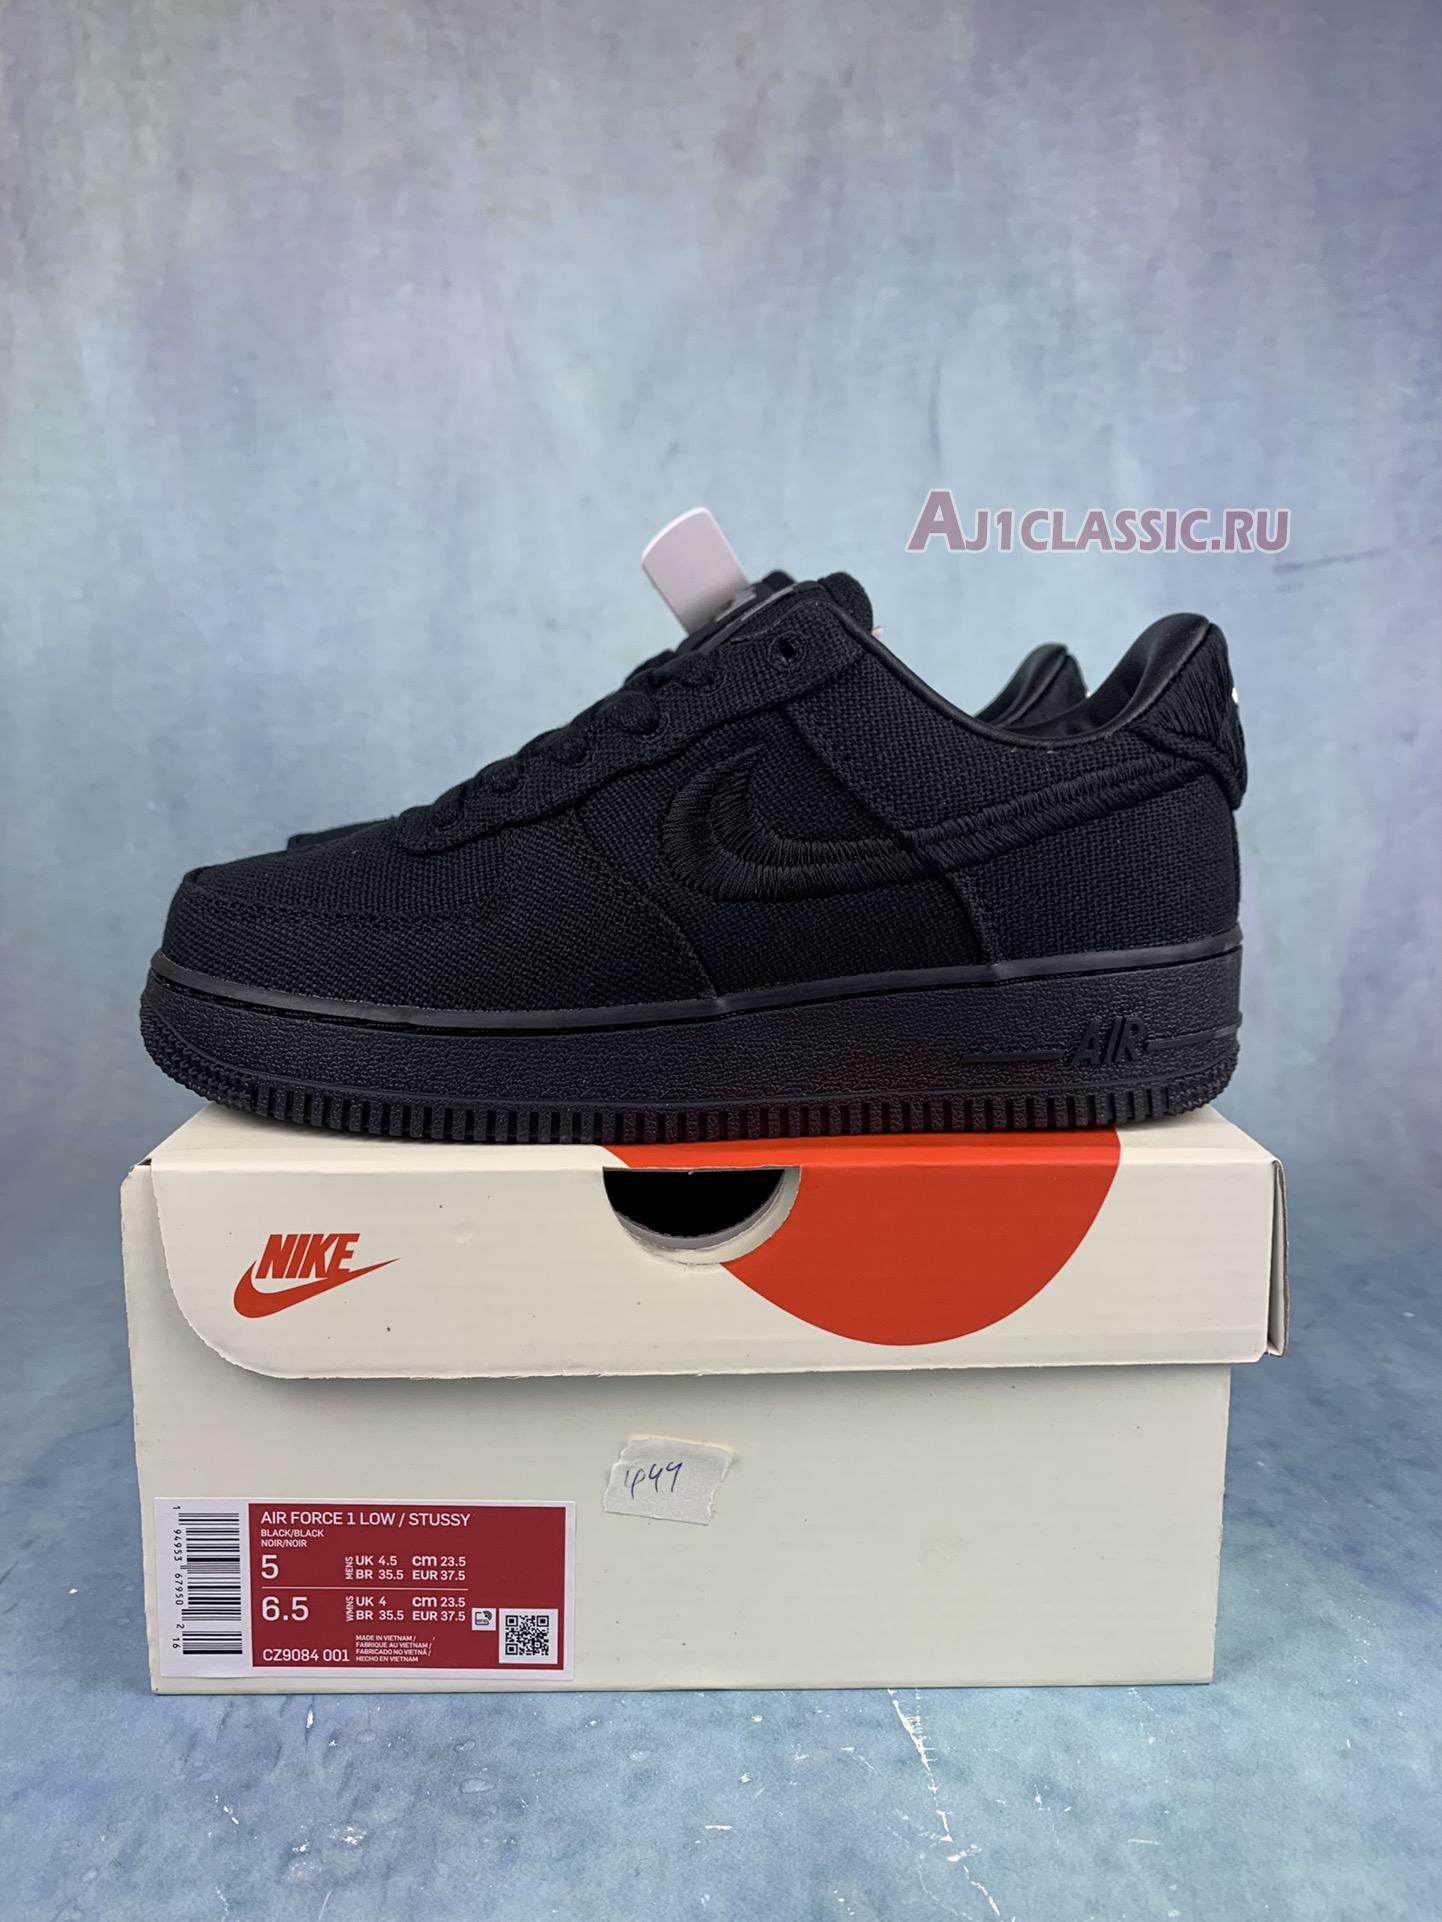 Stussy x Nike Air Force 1 Low Triple Black CZ9084-001-2 Black/Black/Black Sneakers